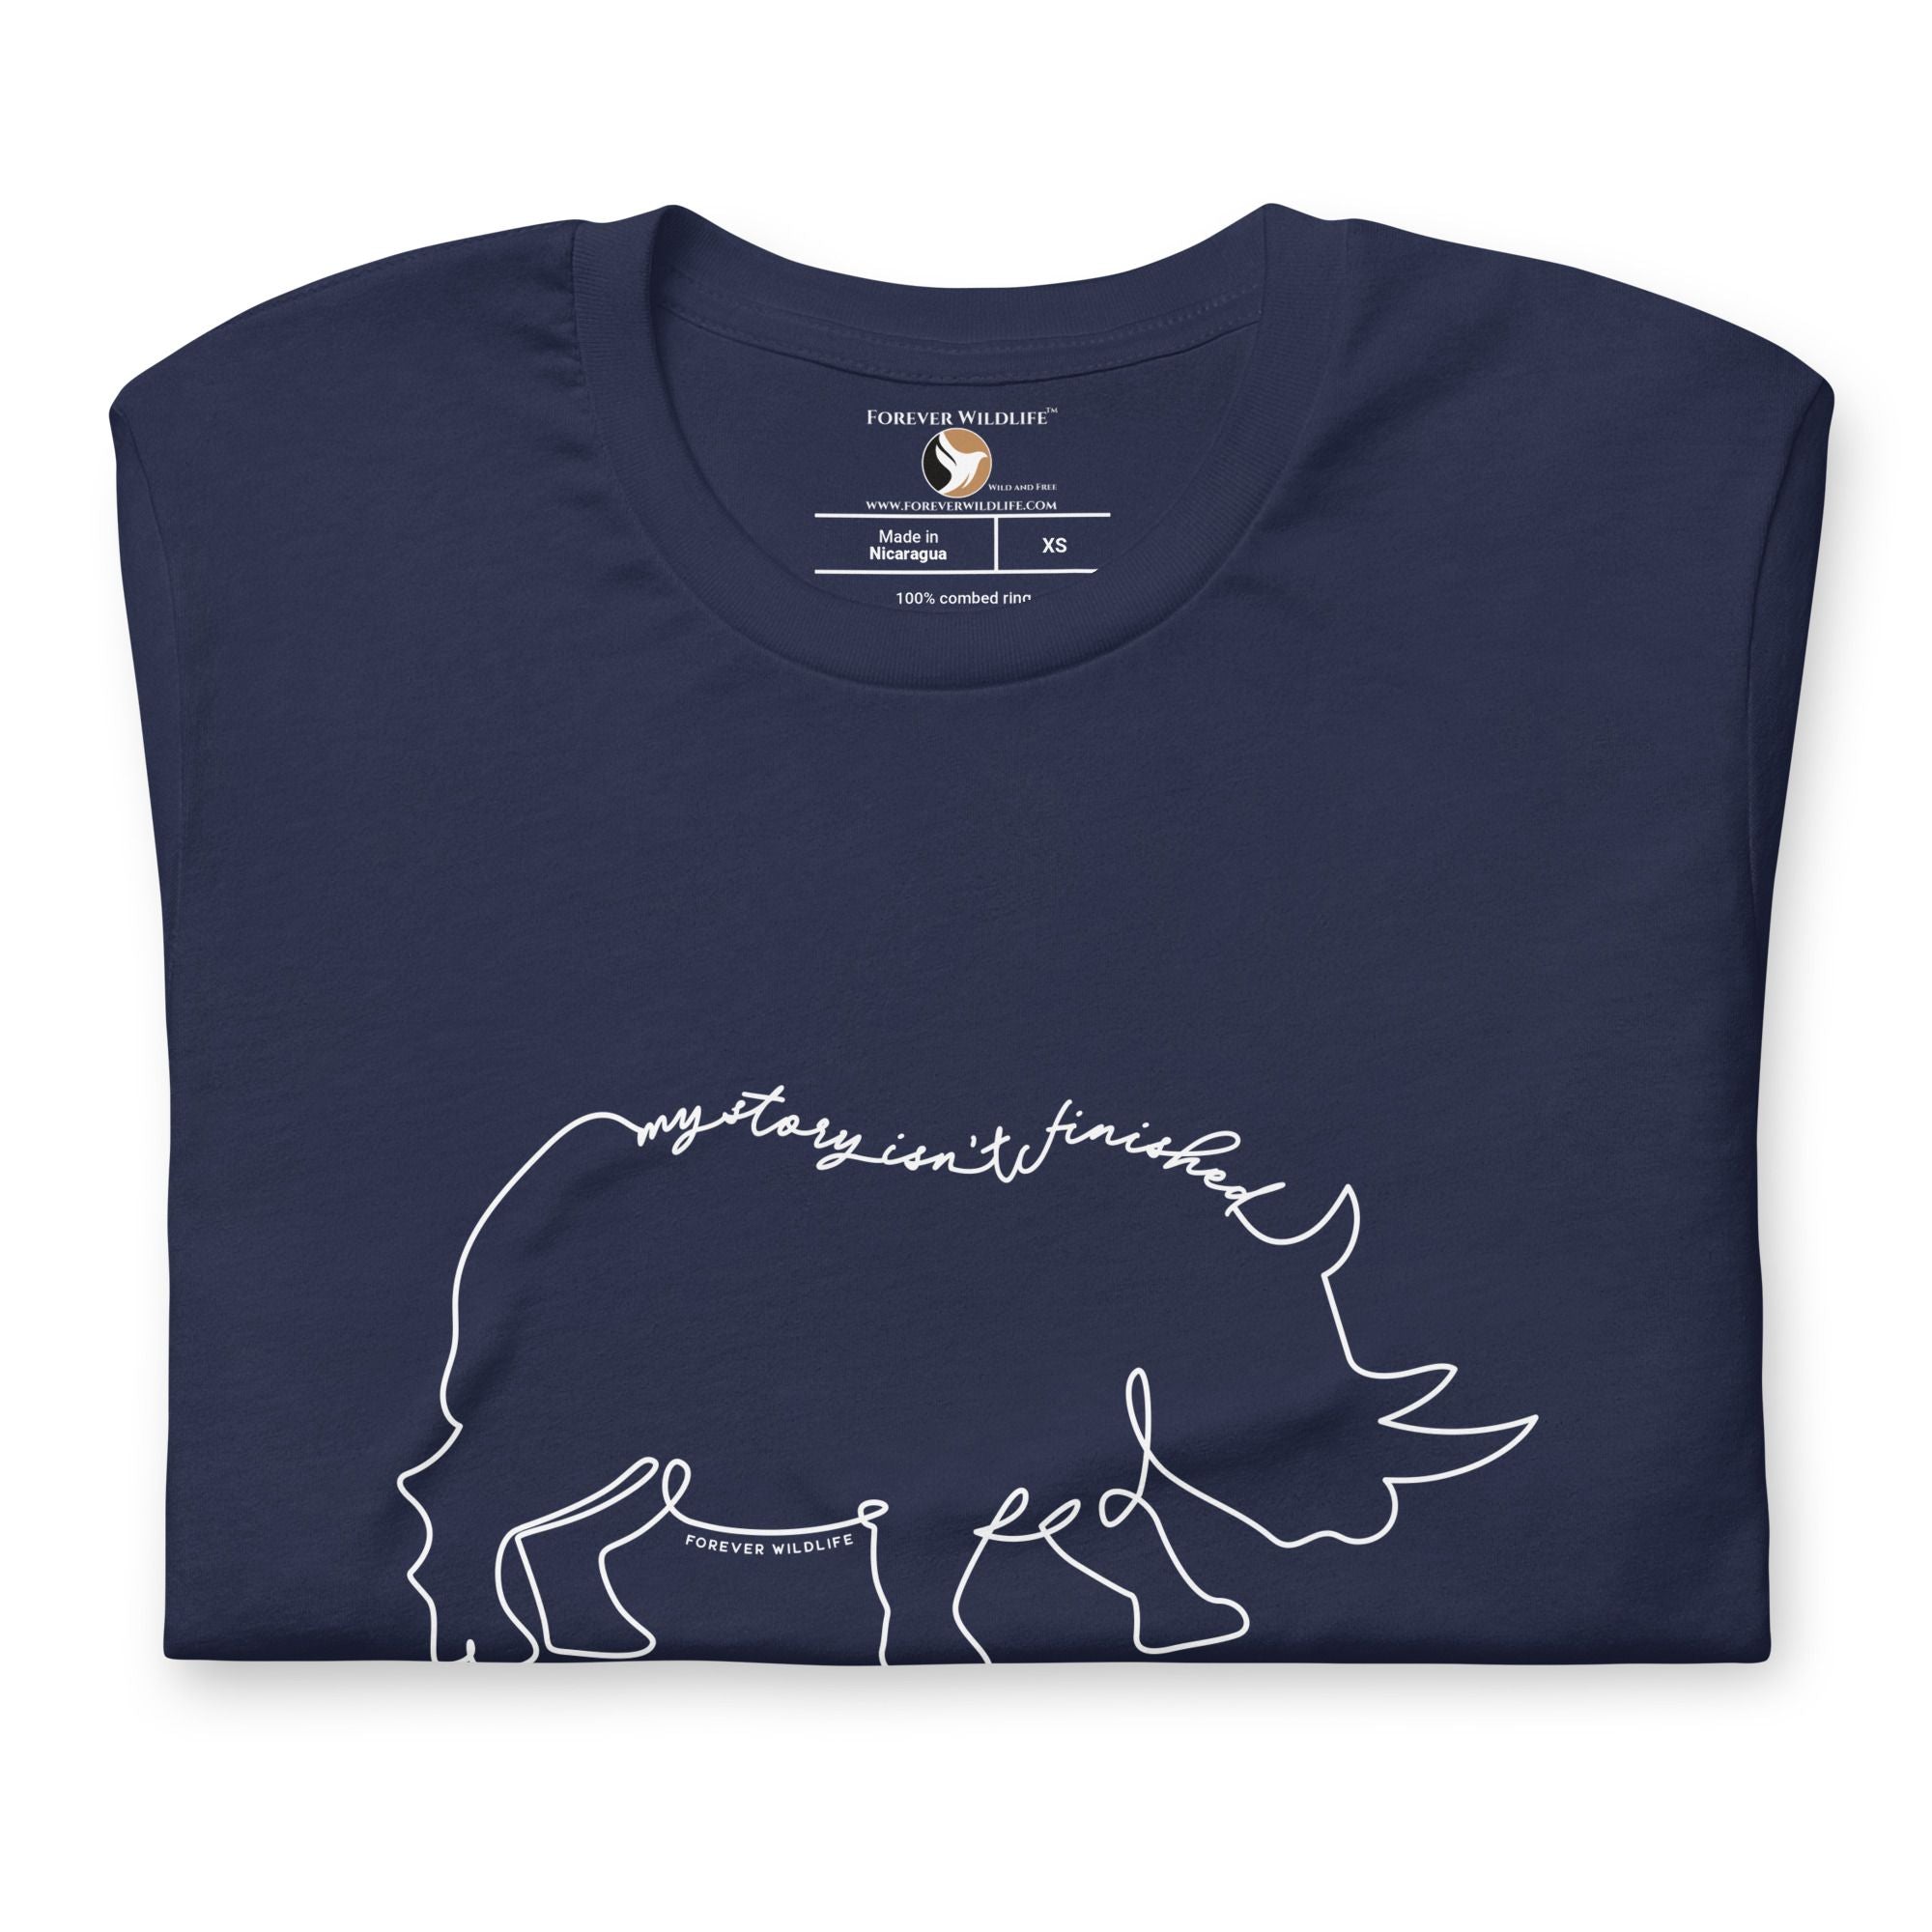 Rhino T-Shirt in Navy – Premium Wildlife T-Shirt Design with My Story Isn't Finished Text, Rhino Shirts and Wildlife Clothing